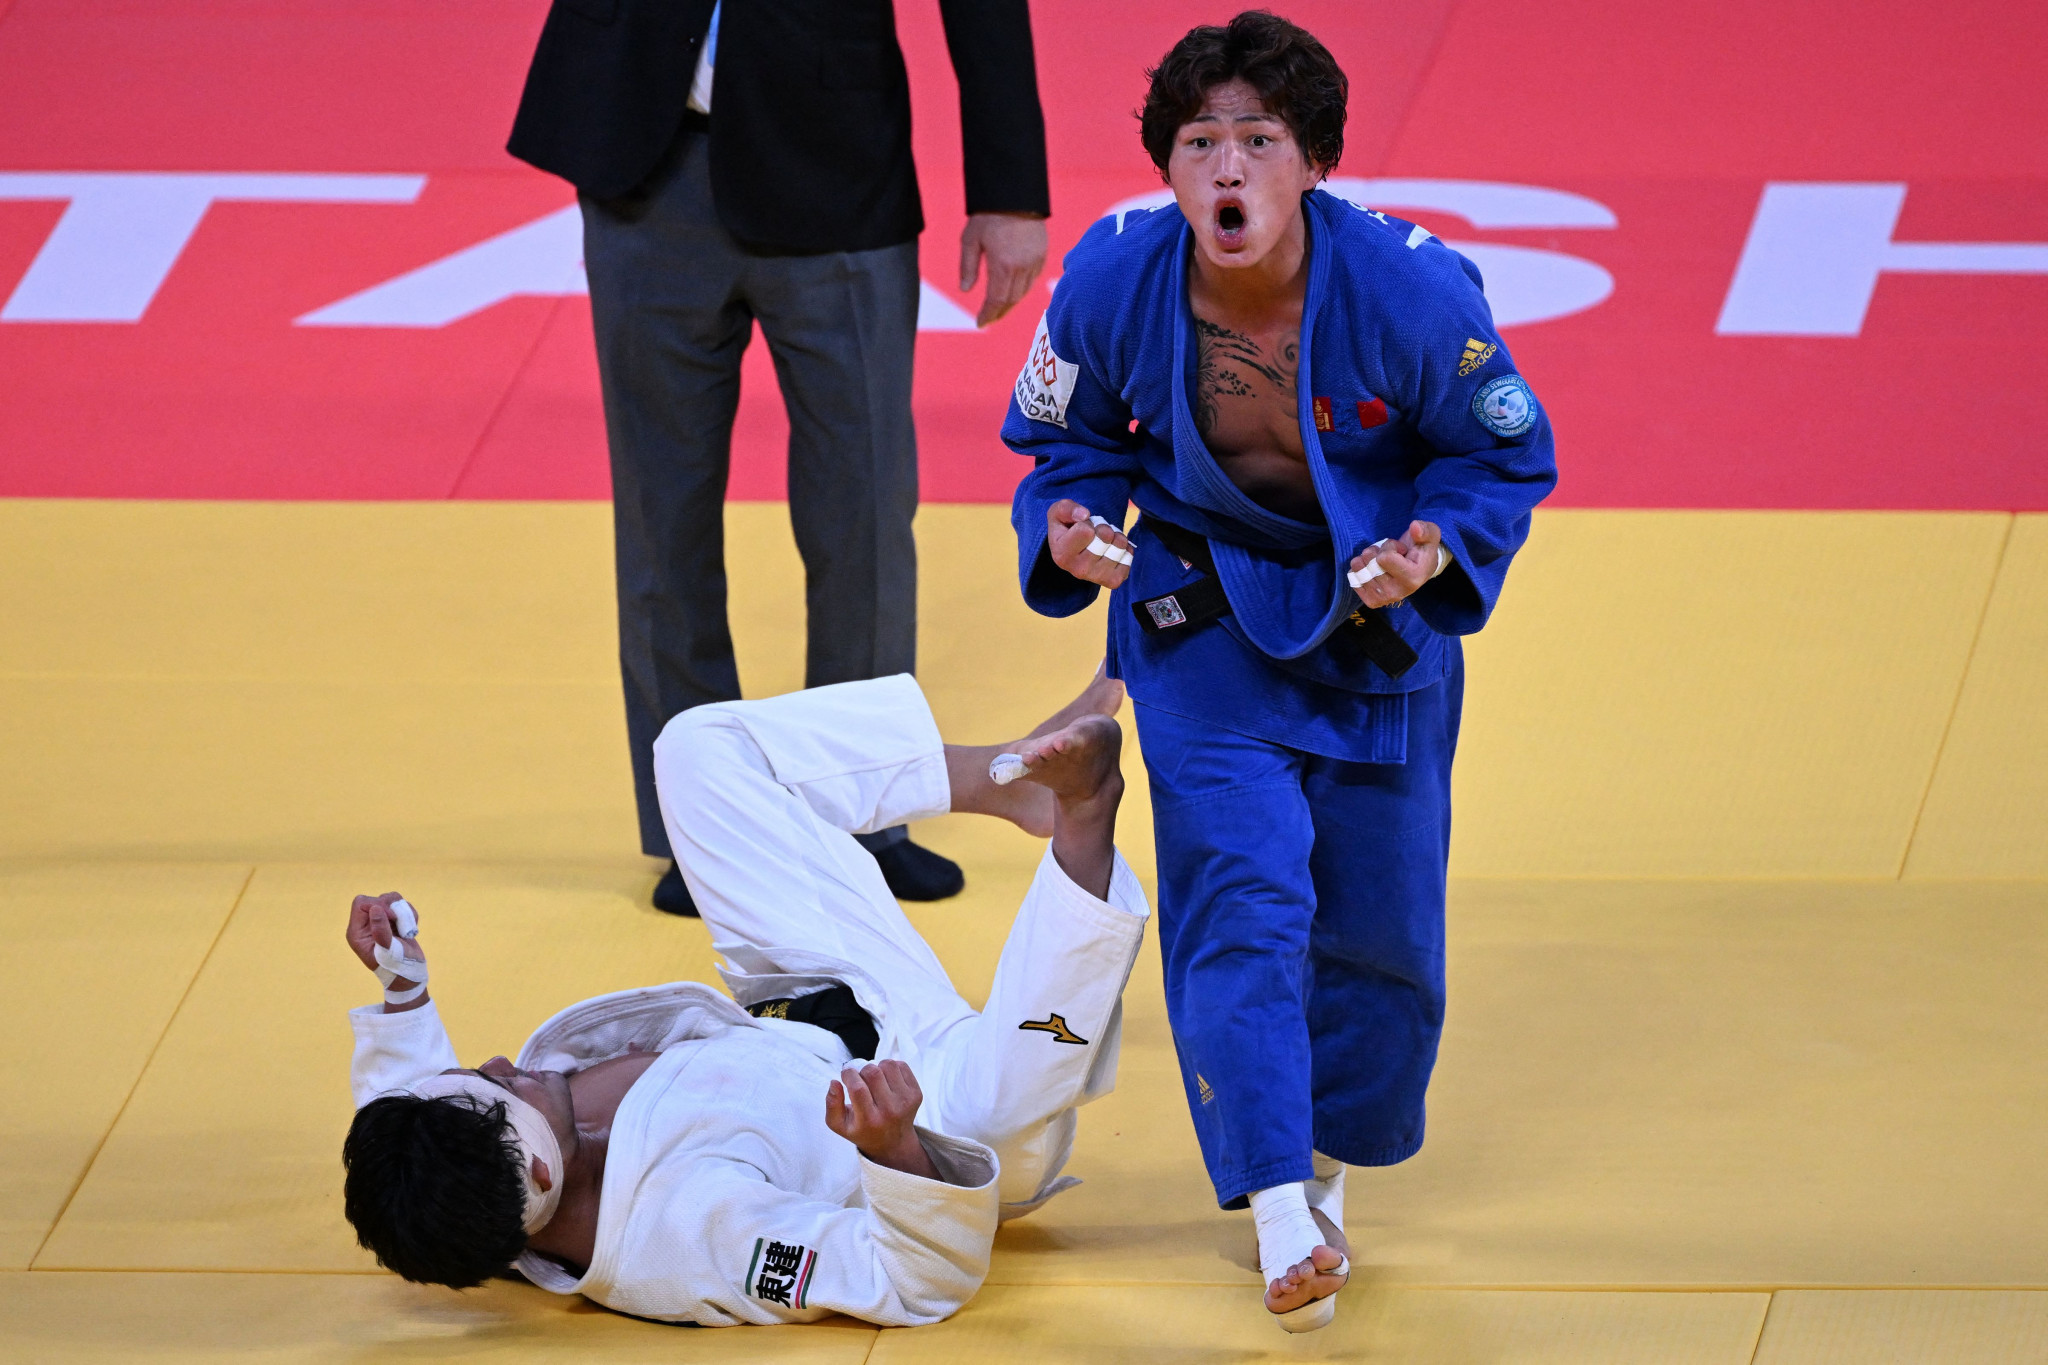 Tsogtbaatar Tsend-Ochir prevented Soichi Hashimoto from extending Japan's lead in the World Judo Championships standings in Tashkent ©Getty Images